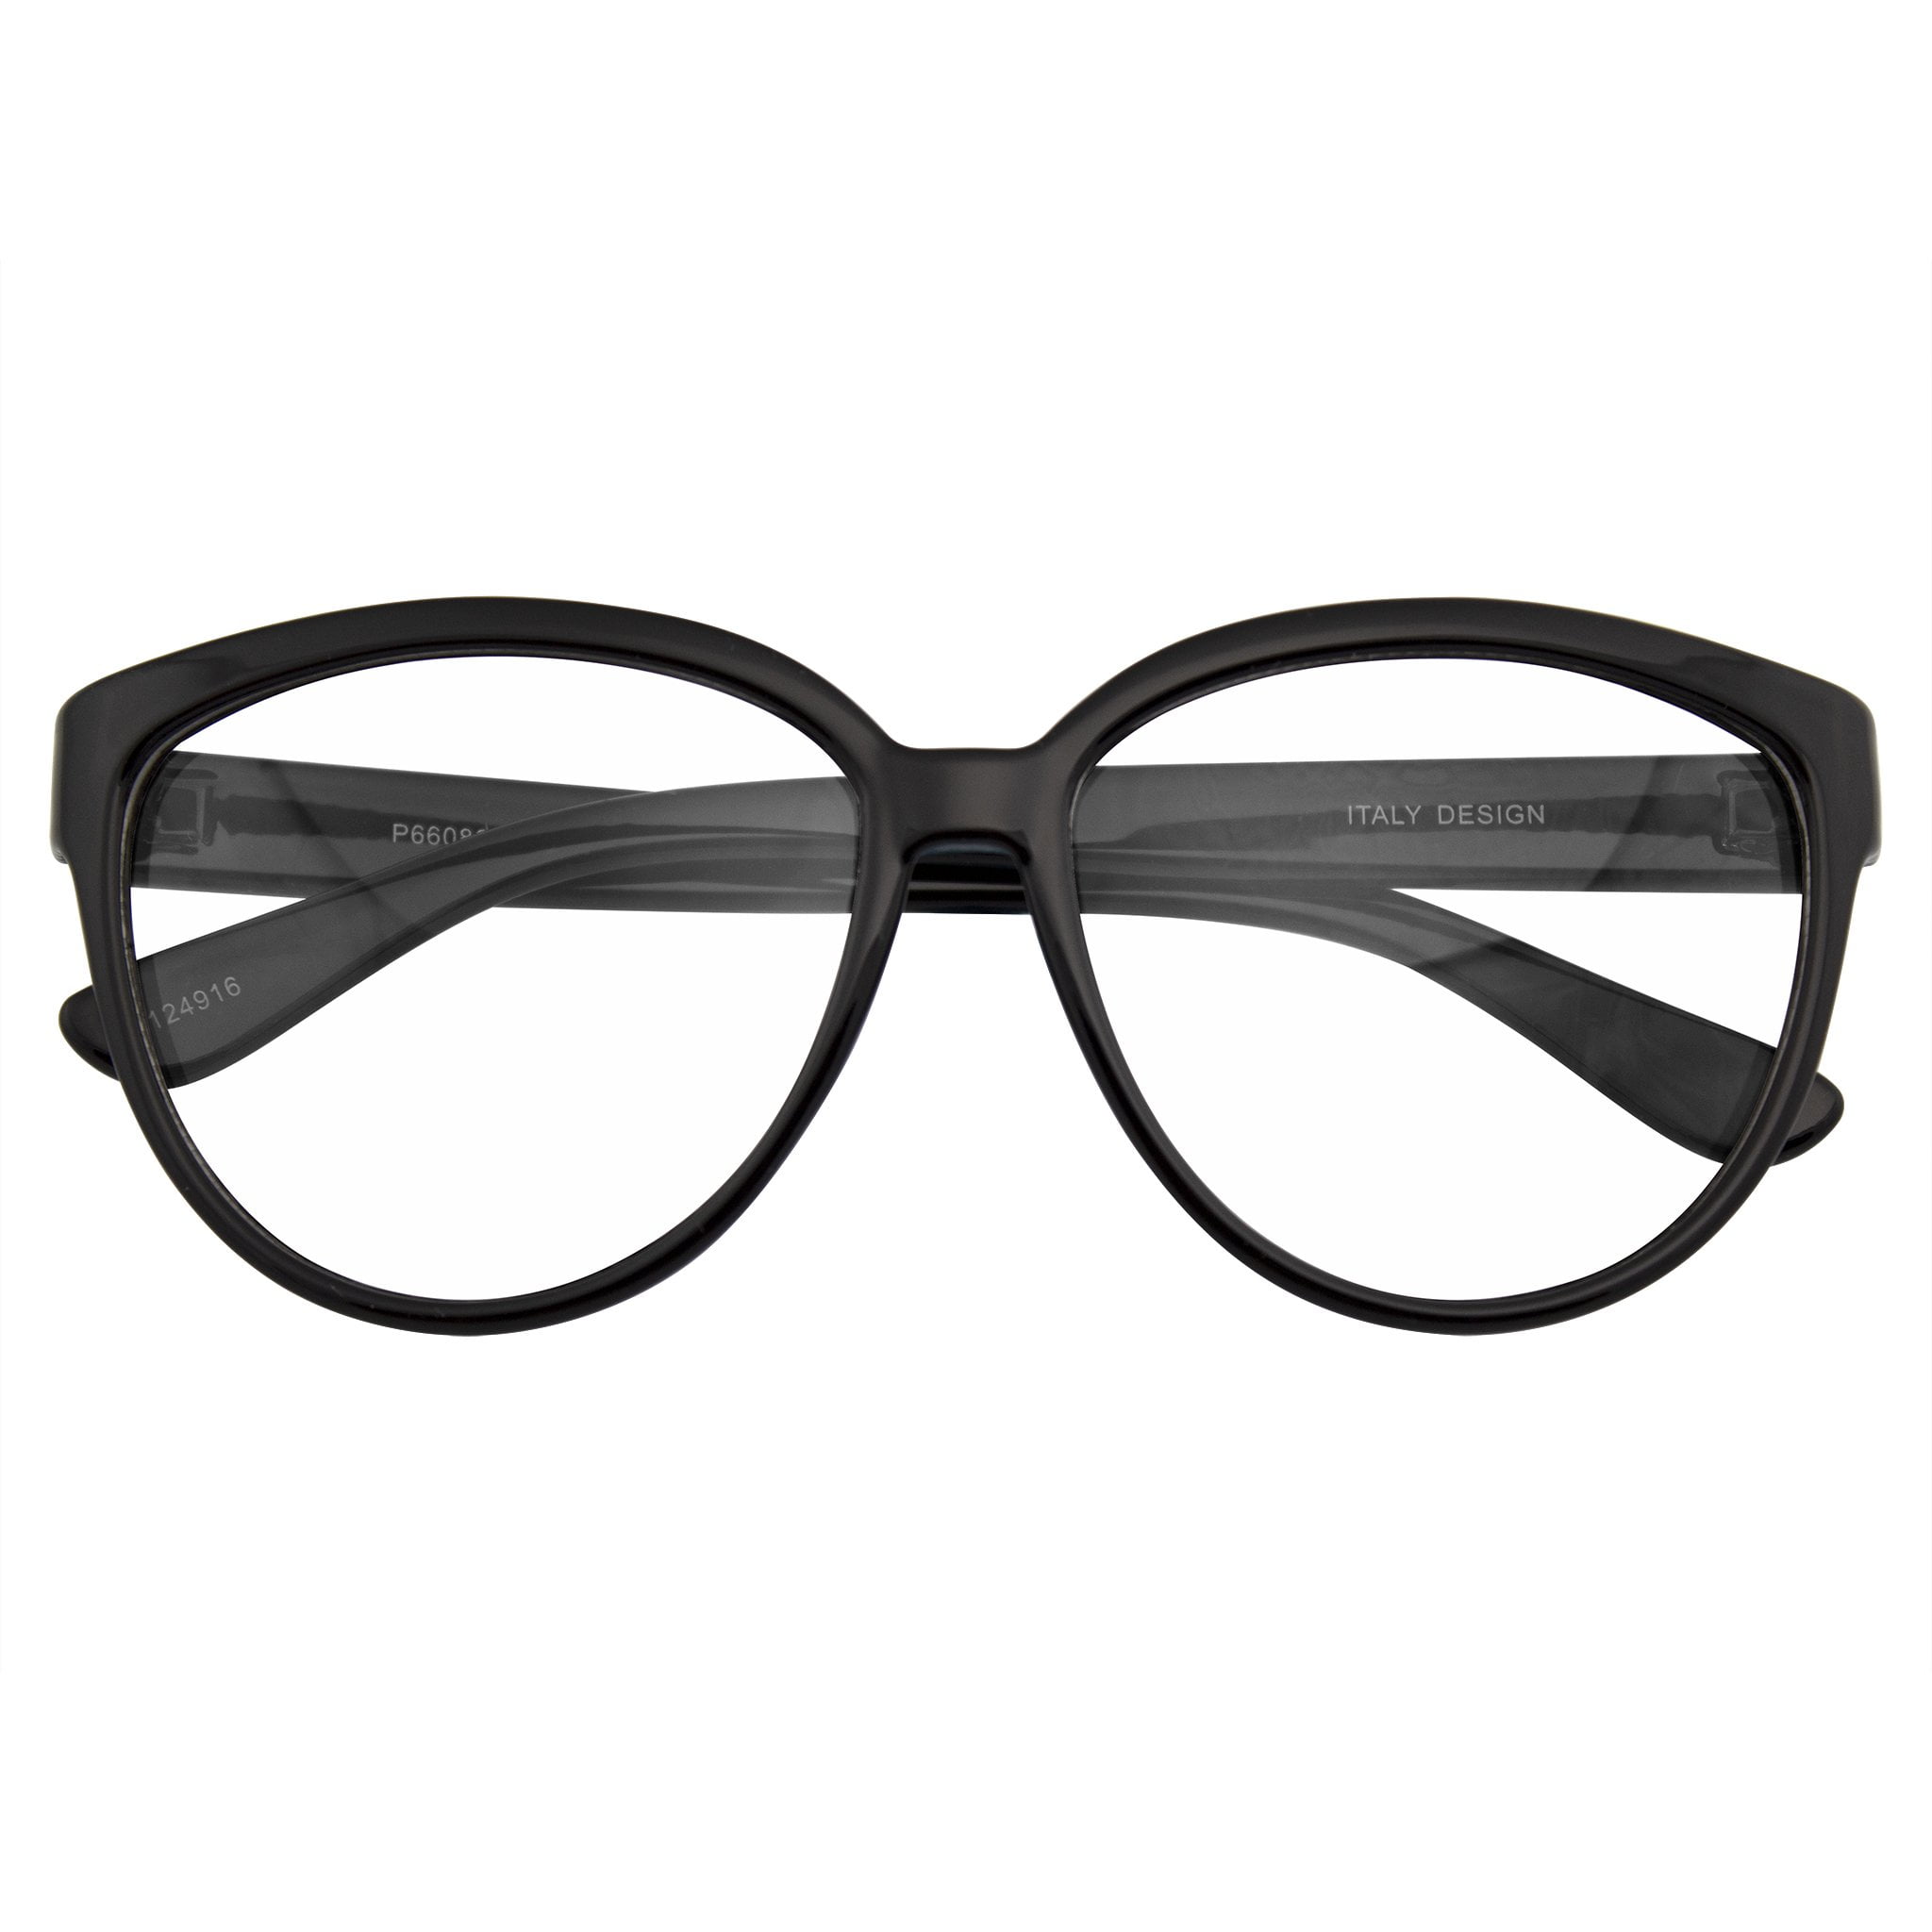 Clear Lenses Glasses Classic Vintage Nerd Geek Frames Fashion Eyewear 